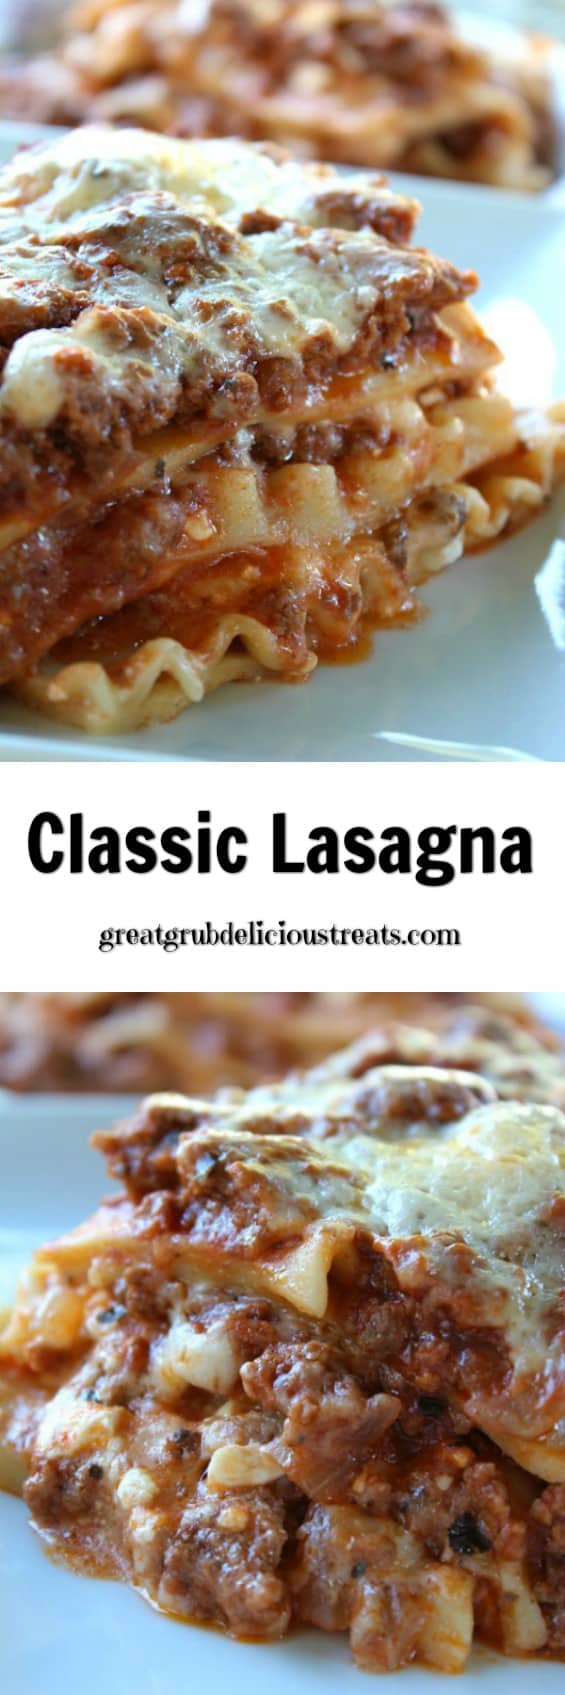 Best Classic Lasagna Recipe | Great Grub, Delicious Treats